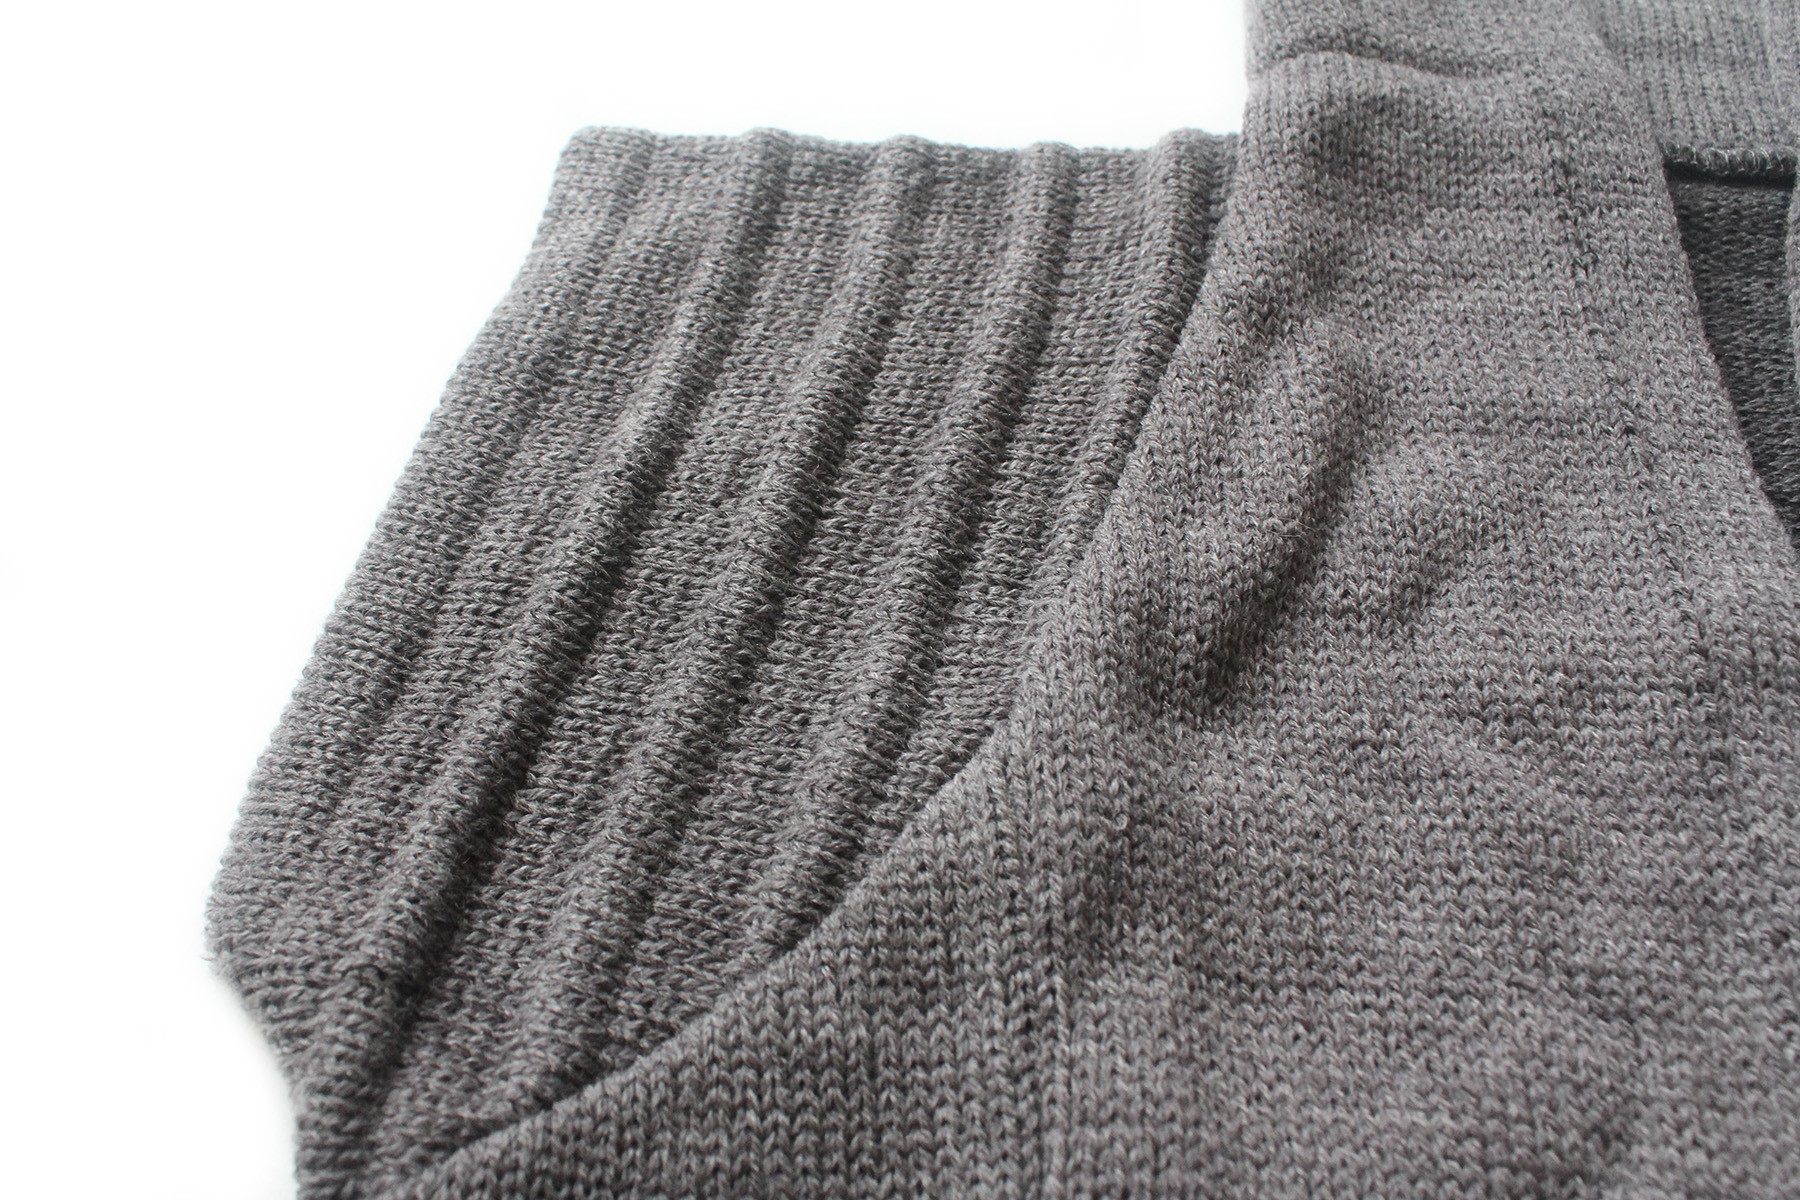 Review - Elhoffer Design knitted Rey vest - The Kessel Runway